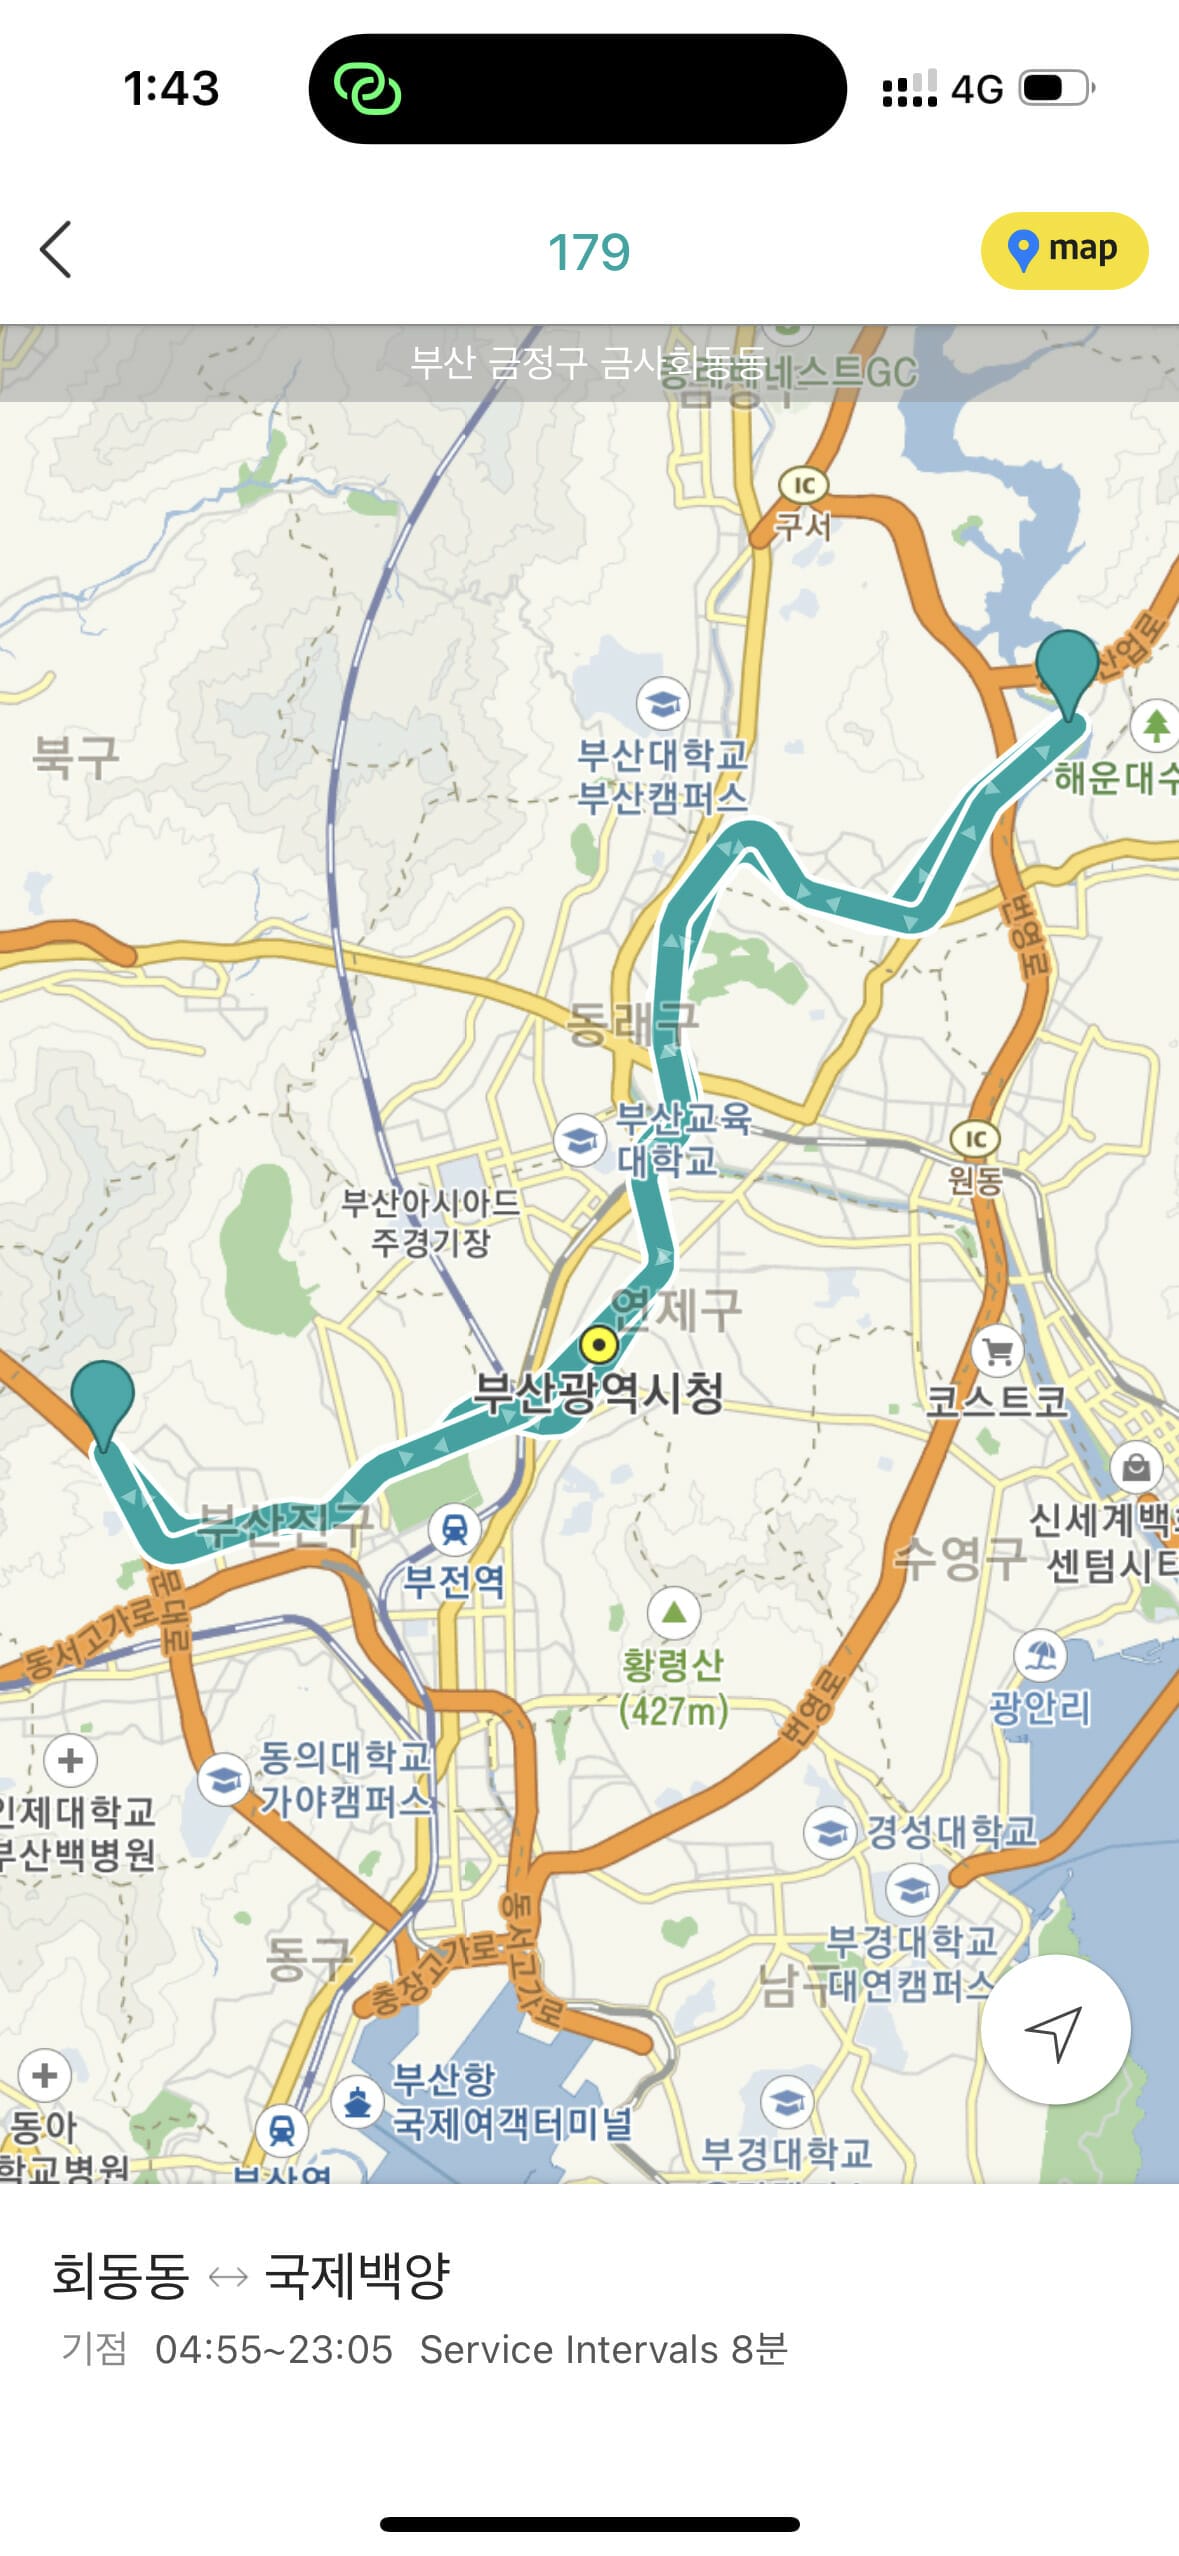 13 Best Korean Travel Apps - Prepare for Your Korea Trip 6